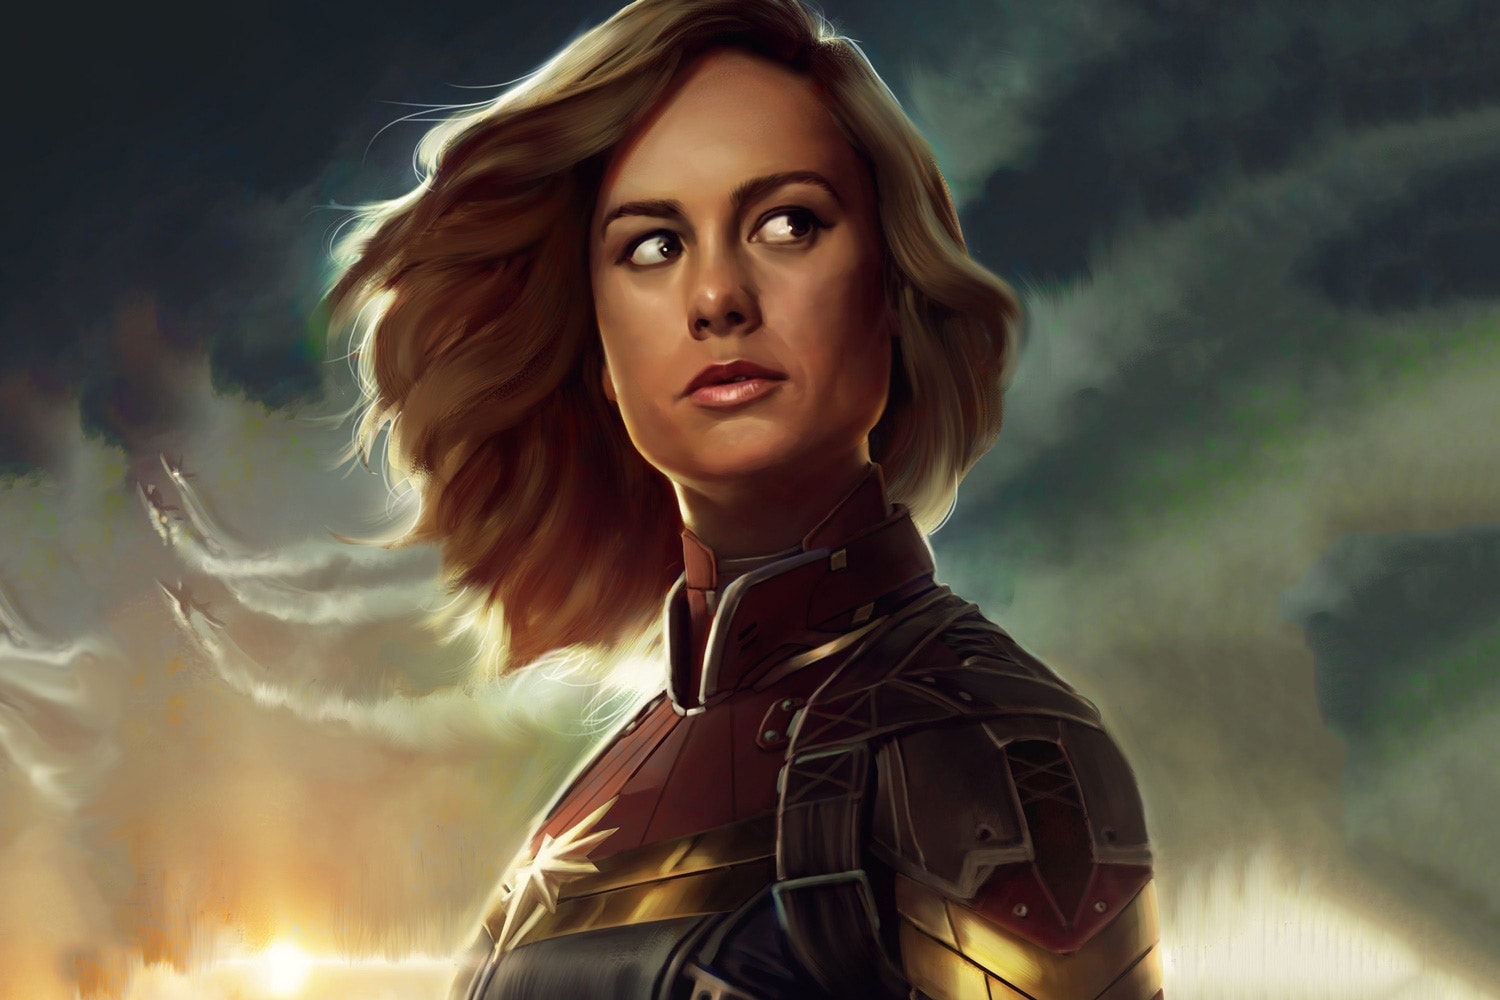 編劇表示 Brie Larson 在開拍《Captain Marvel》前已拍完《Avengers 4》